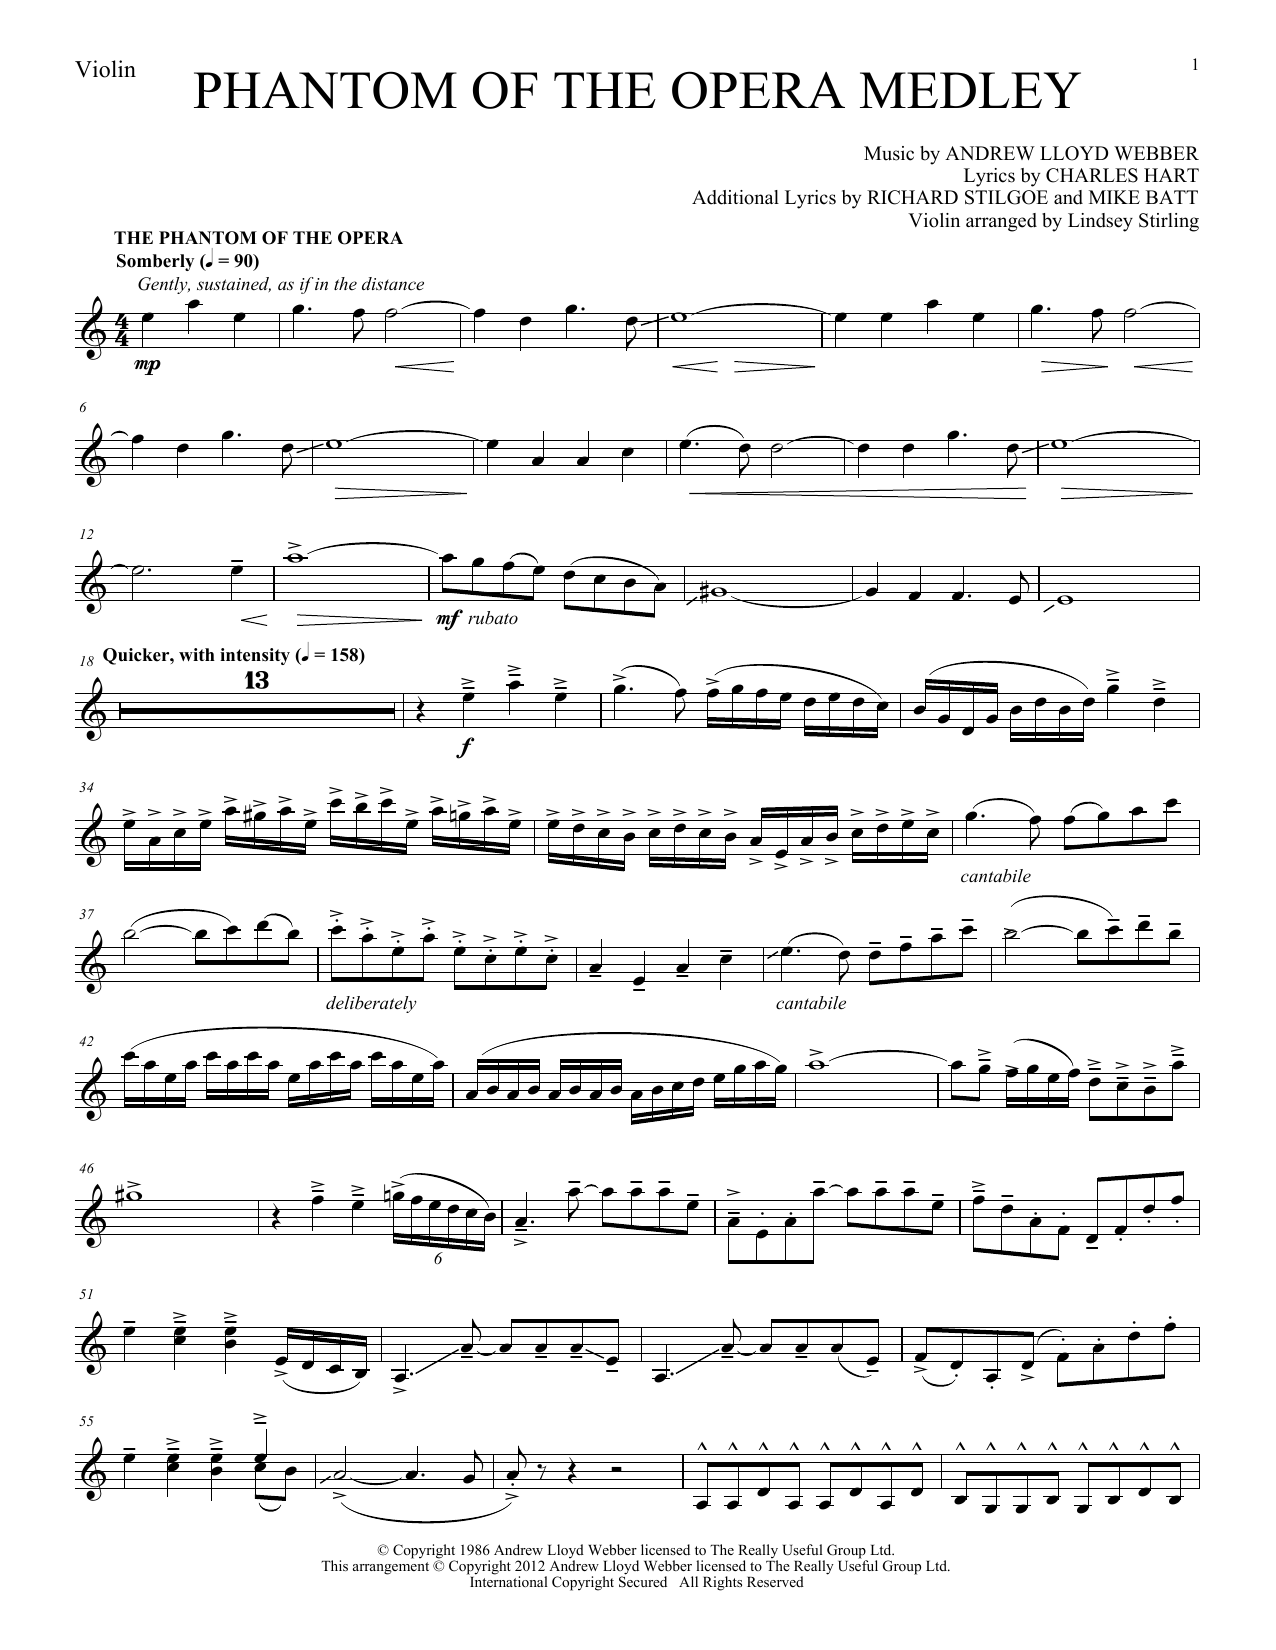 Lindsey Stirling Phantom of The Opera Medley Sheet Music Notes & Chords for Violin - Download or Print PDF